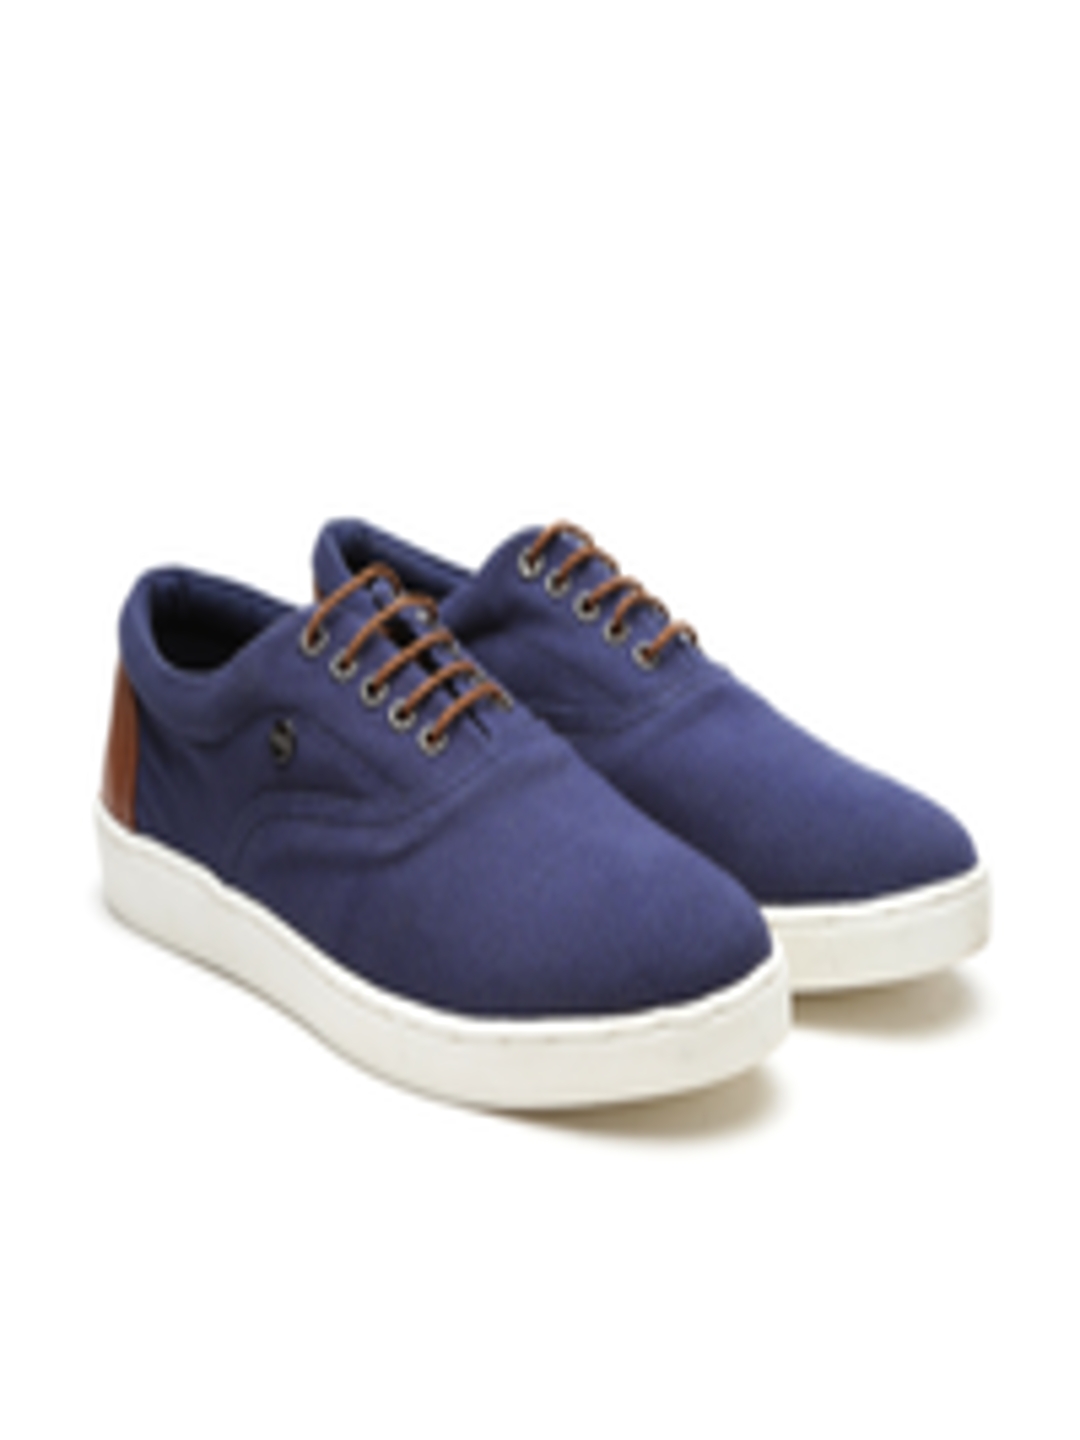 Buy Carlton London Men Navy Blue Sneakers - Casual Shoes for Men ...